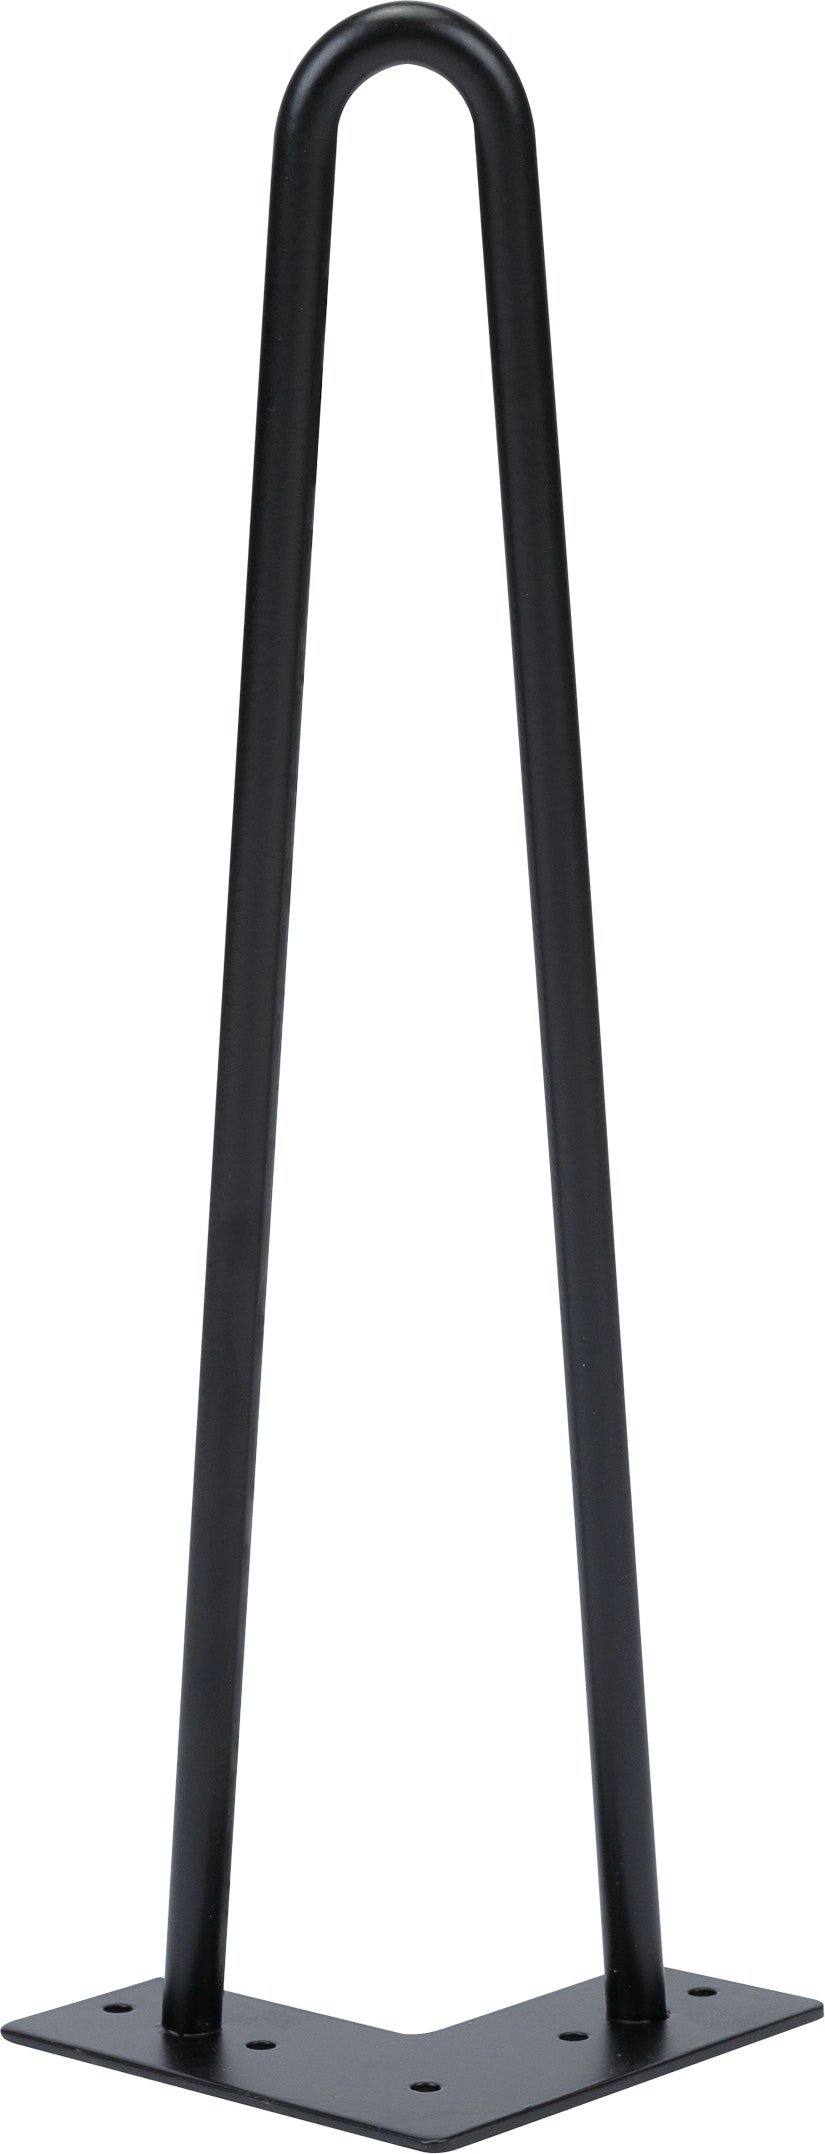 Elias, 2-rods hairpin-bordben til sofabord/bænk, Ø1,2 cm by Nielsen Design (H: 41.5 cm. B: 10 cm., Sort)